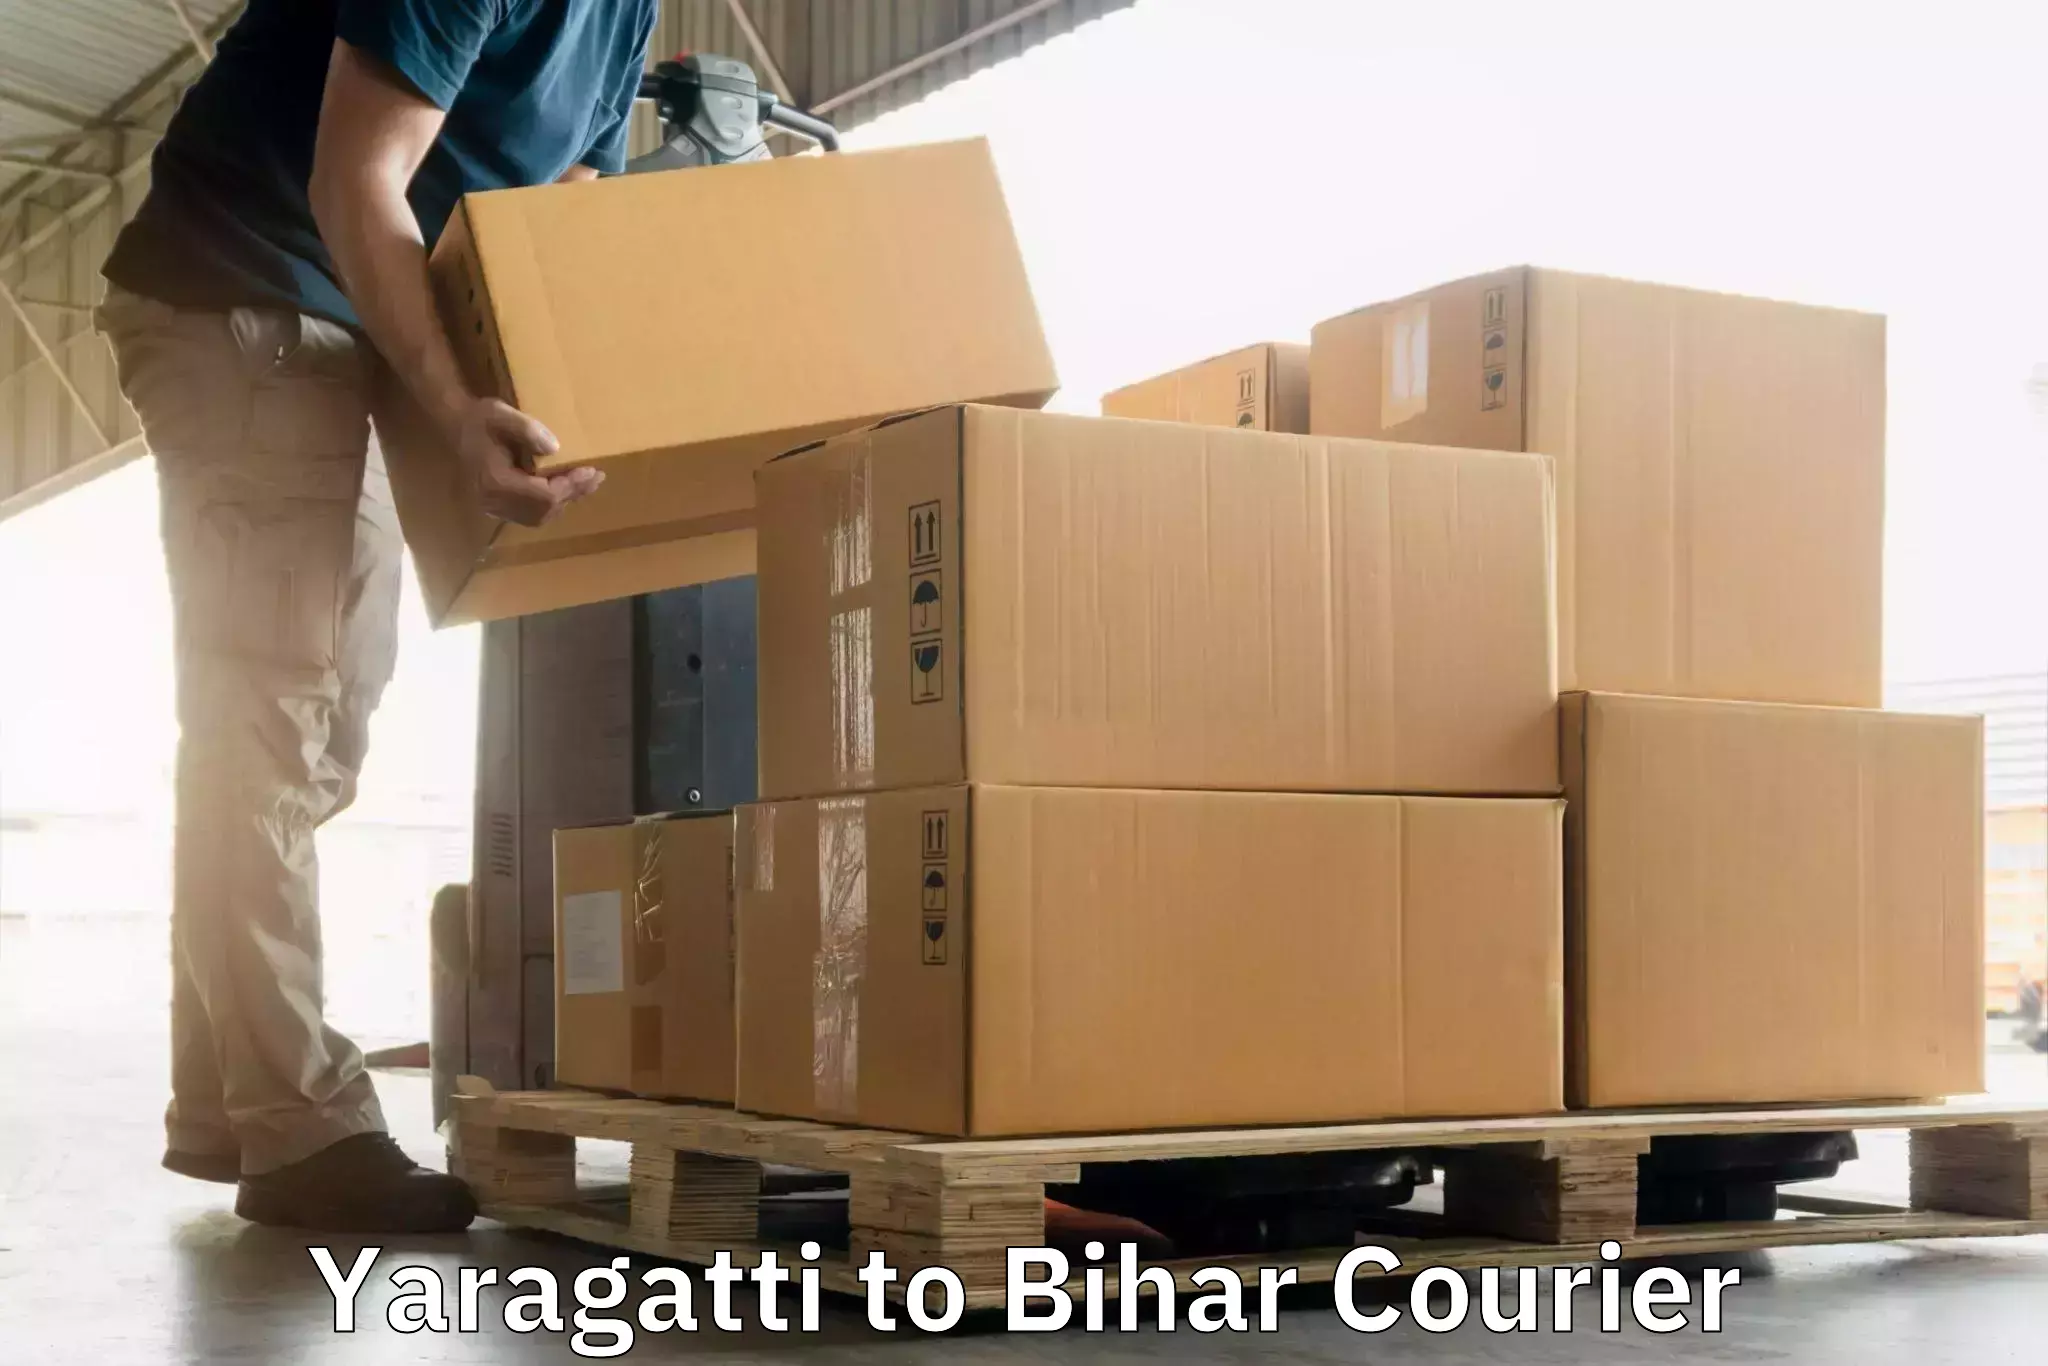 Efficient order fulfillment Yaragatti to Jiwdhara